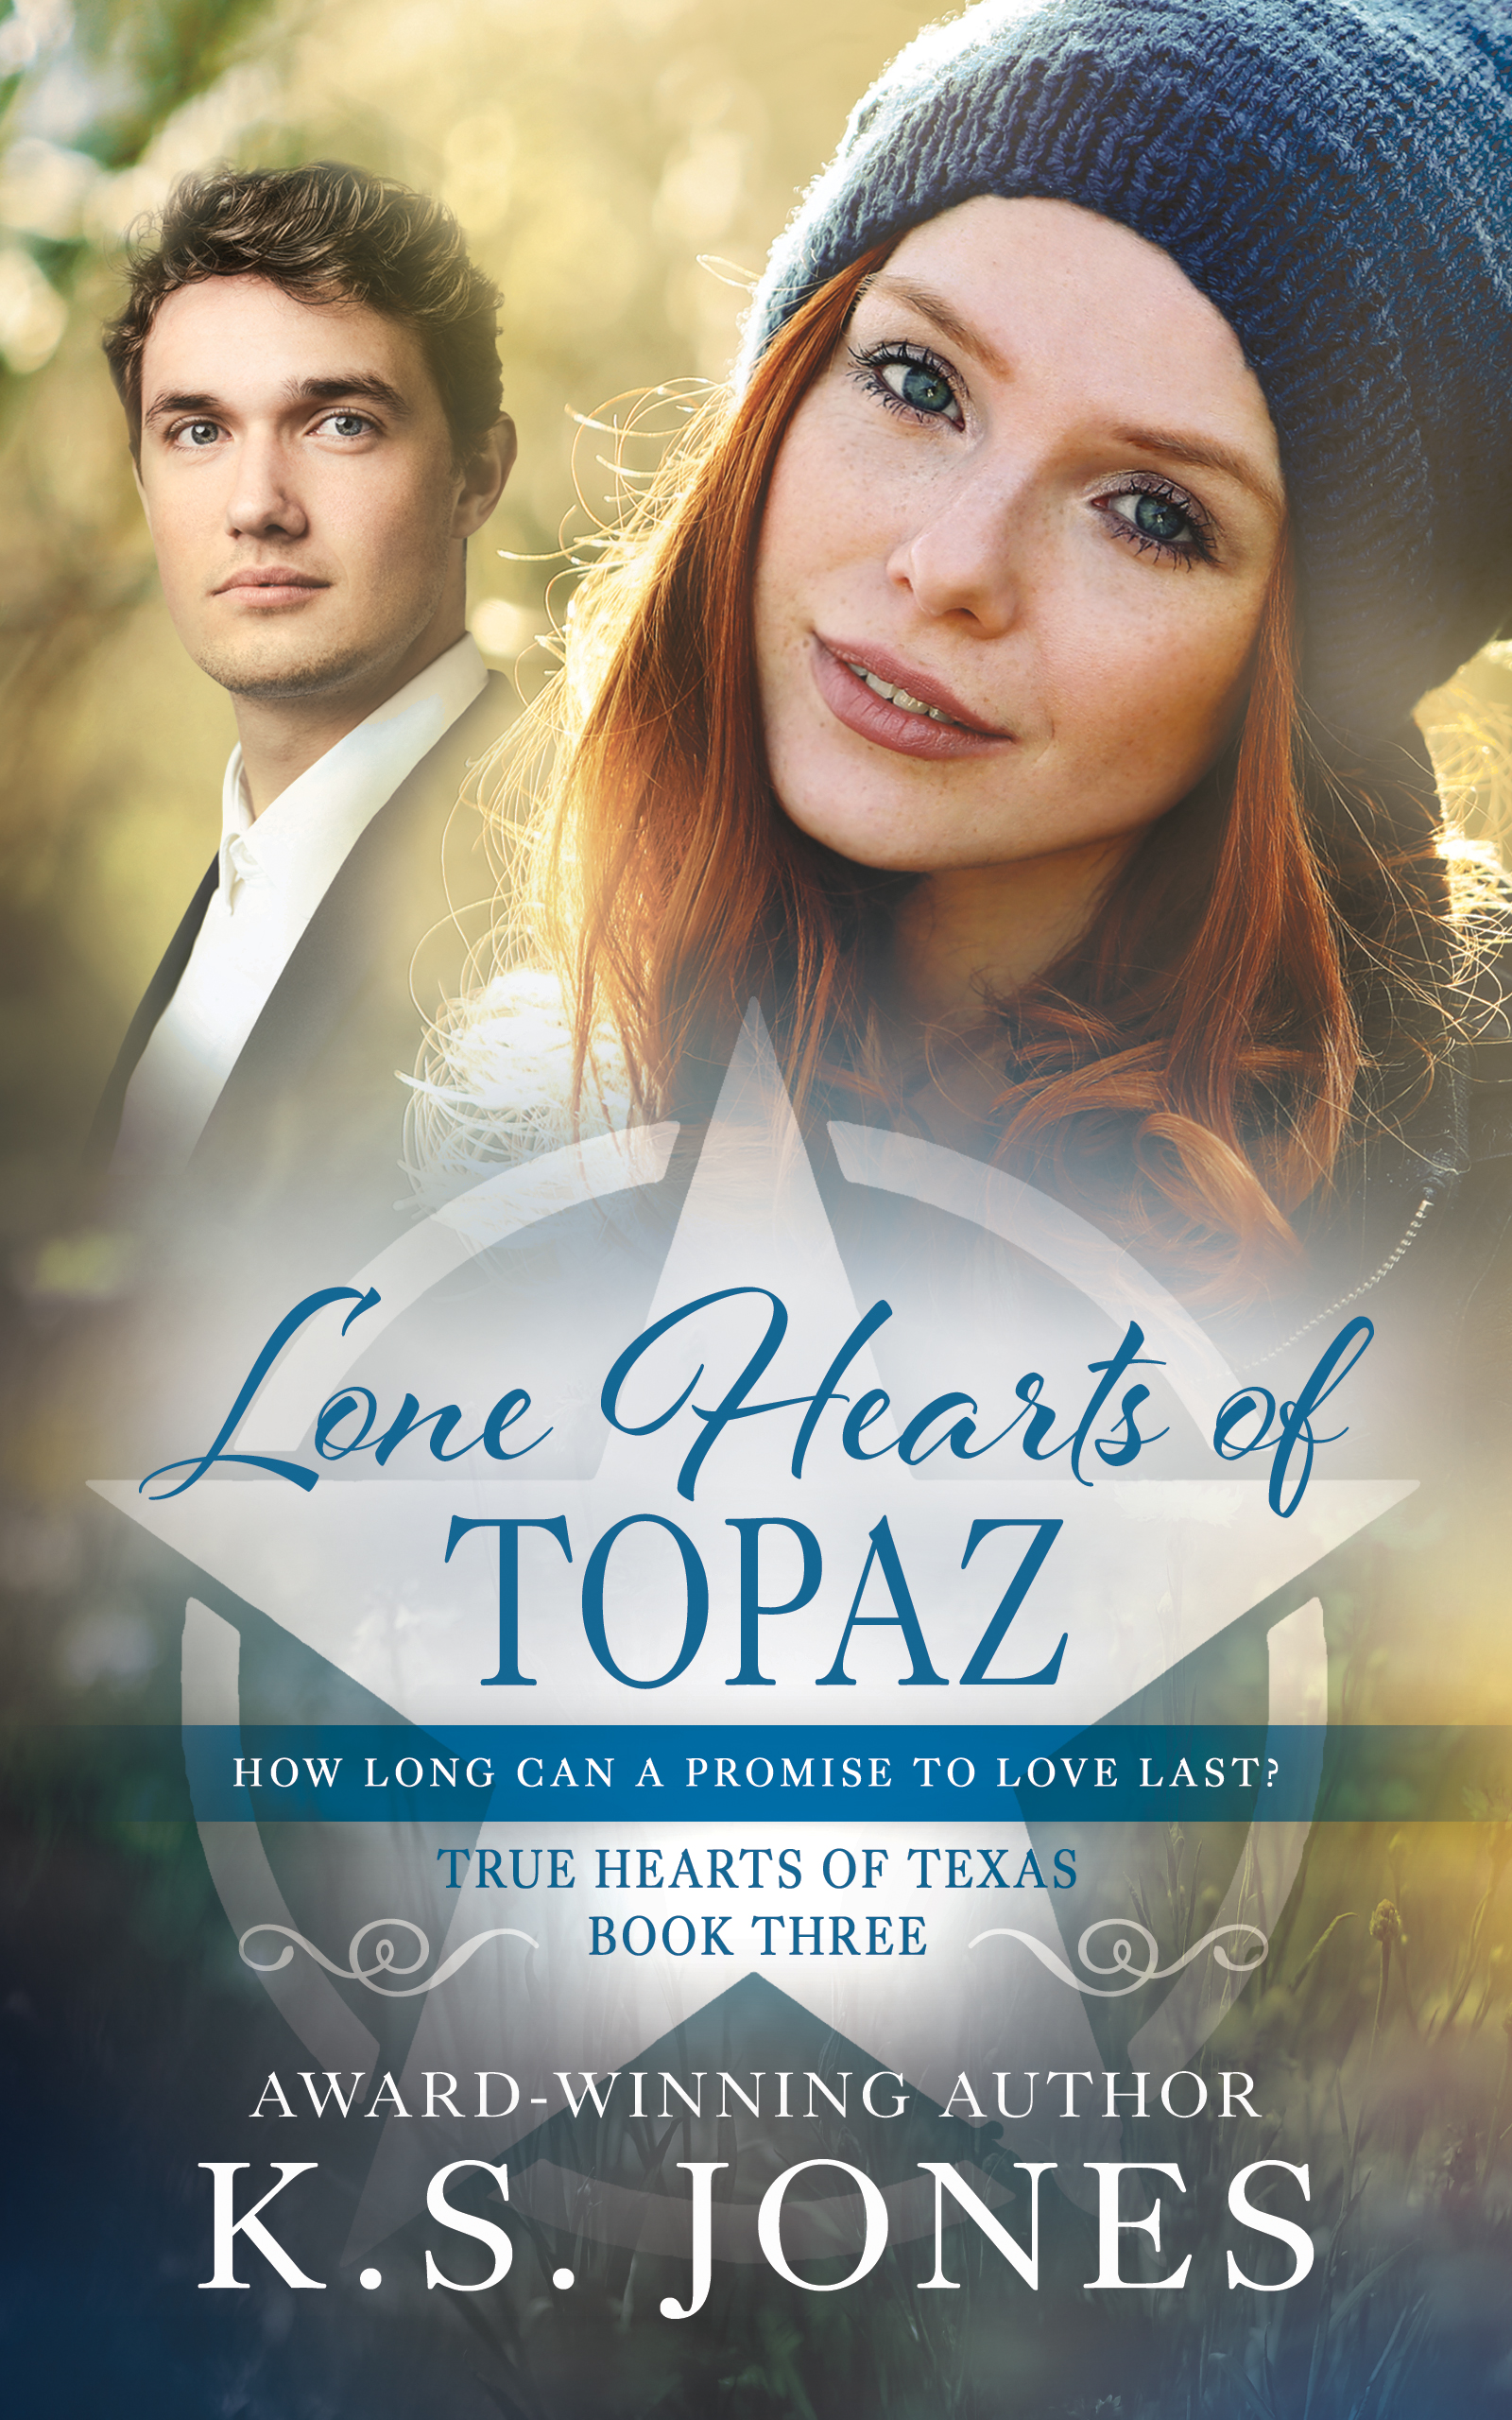 True Hearts of Texas series